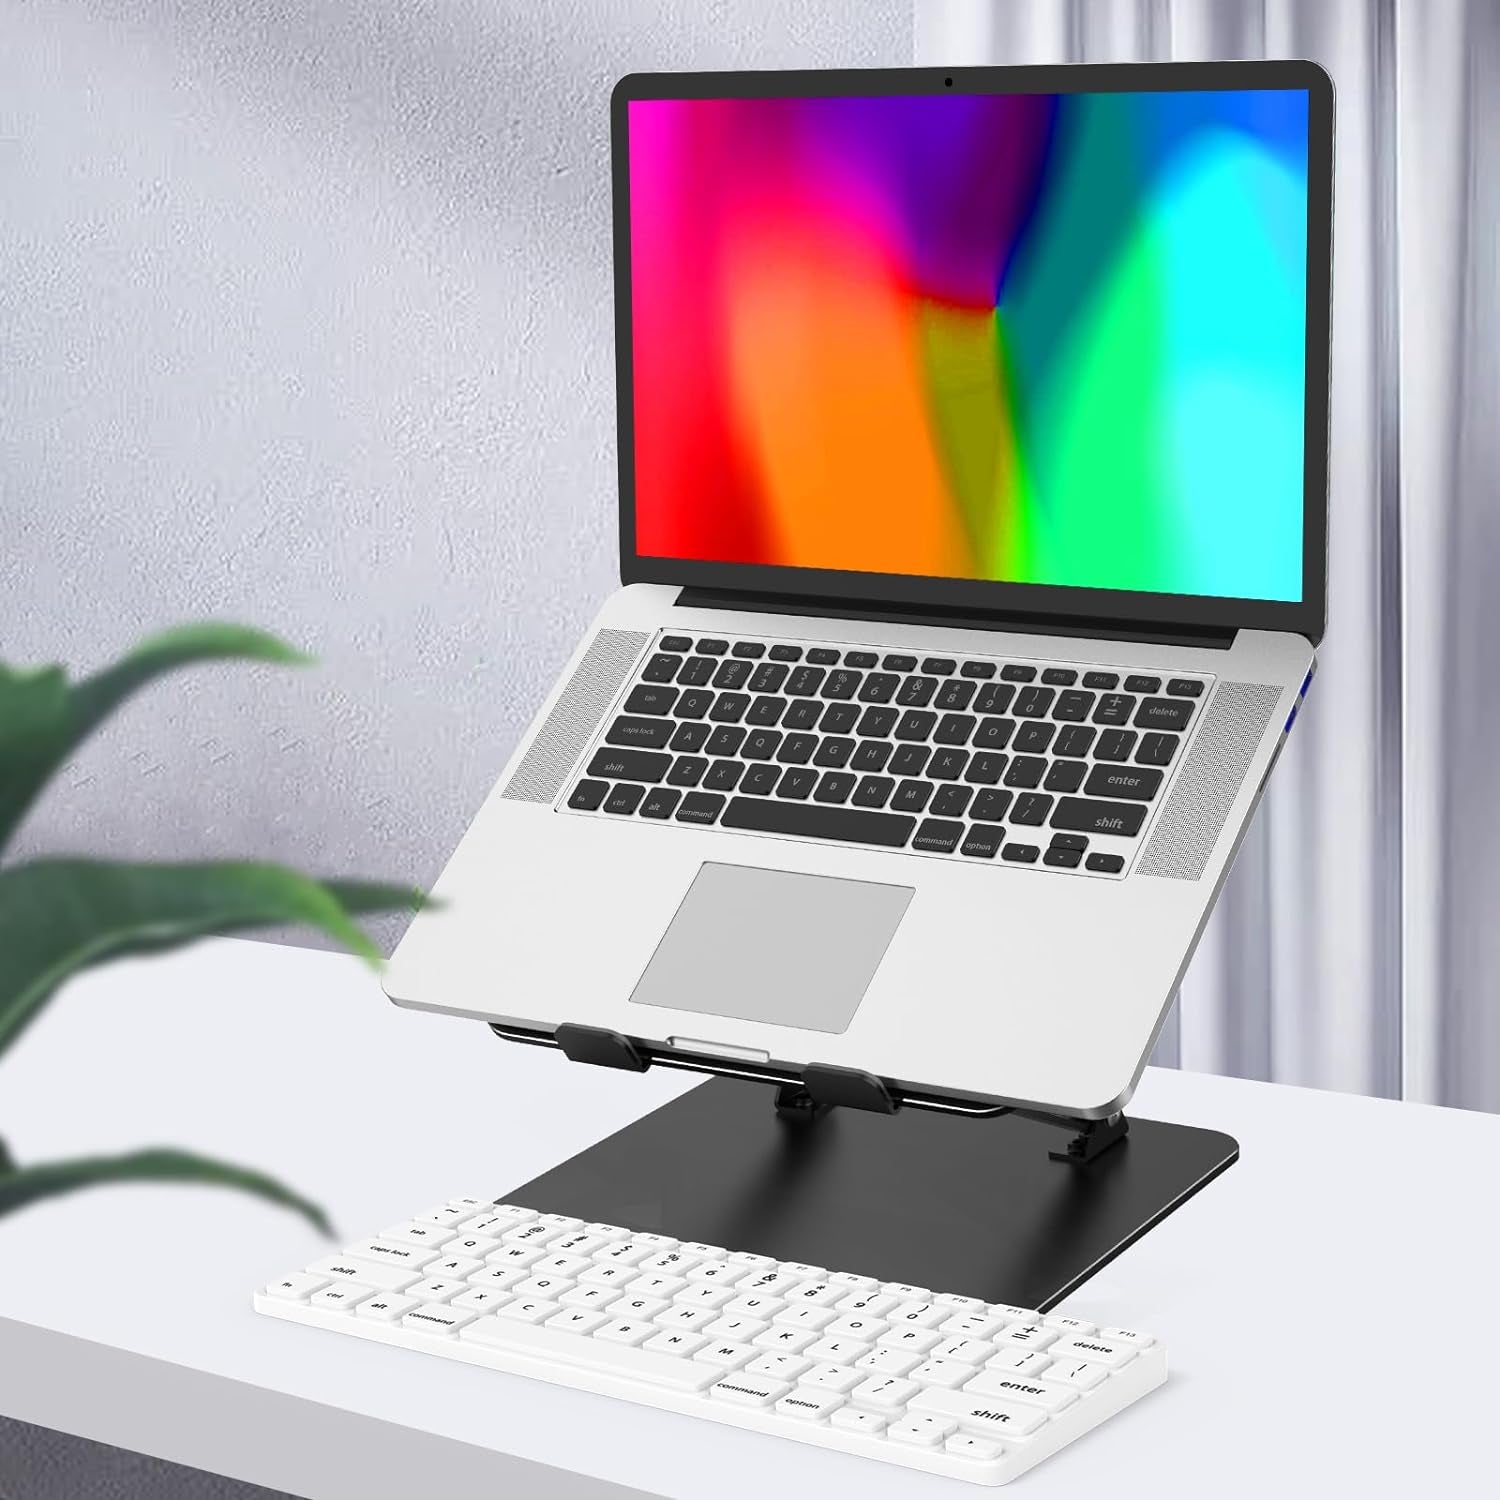 Adjustable Laptop Stand for Desk, Metal Foldable Laptop Riser, Portable Laptop Holder Mount, Ventilated Cooling Computer Notebook Stand Compatible with 10-15.6” Laptops